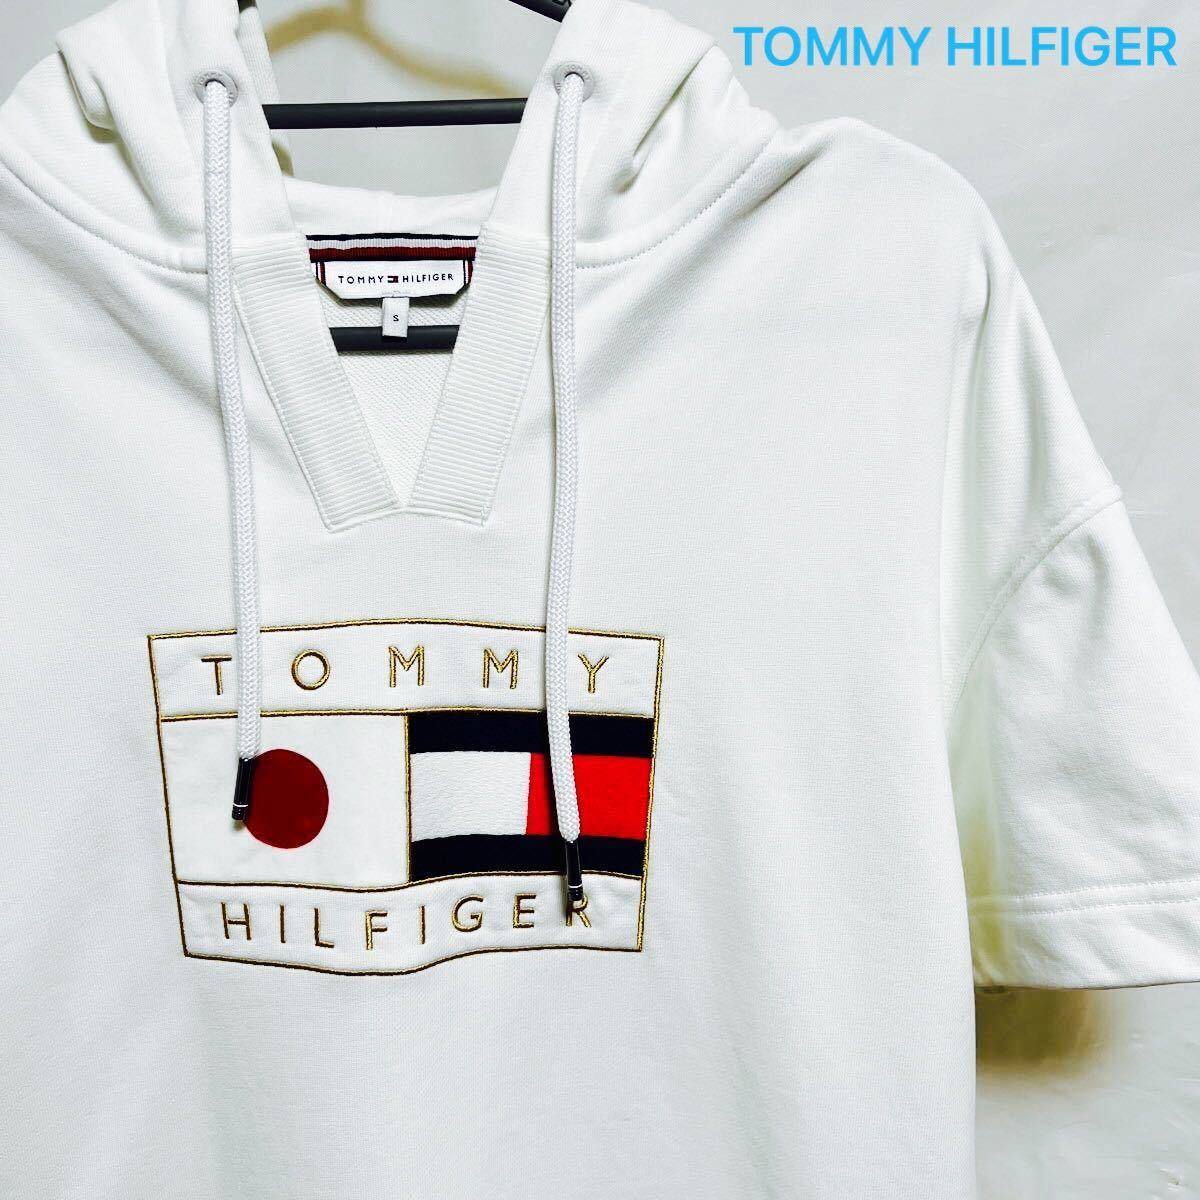 TOMMY HILFIGER トミーヒルフィガー 半袖パーカー パーカー ロゴ刺繍 国旗刺繍 白 ホワイト Sサイズ 美品